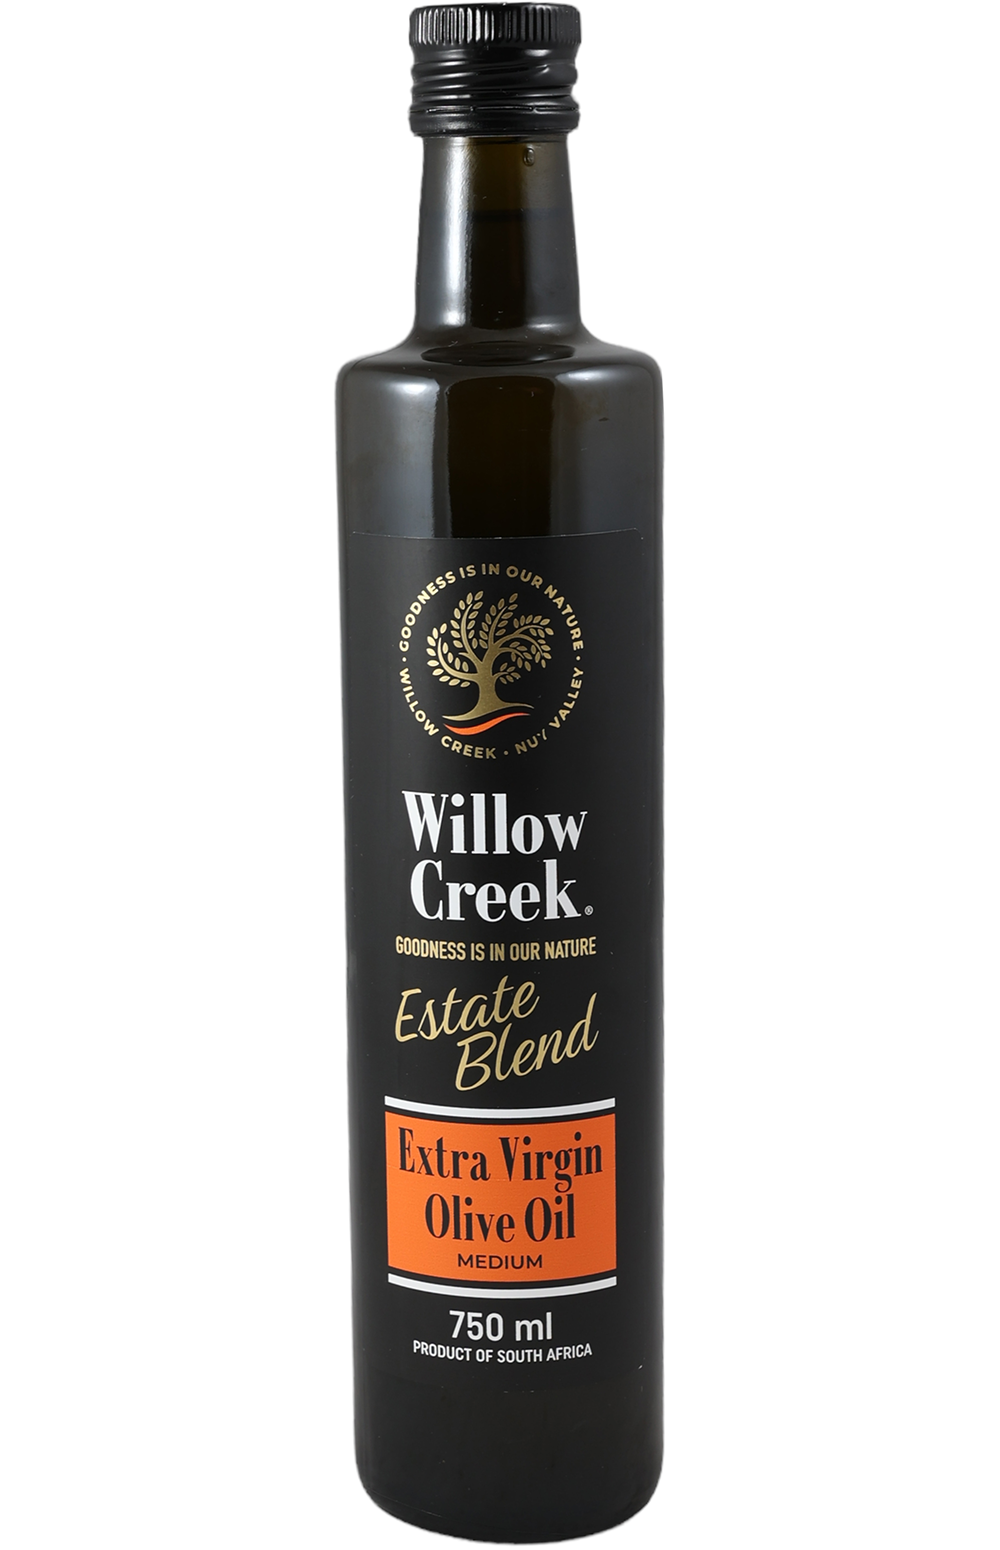 Willow Creek Estate Blend Extra Virgin Olive Oil